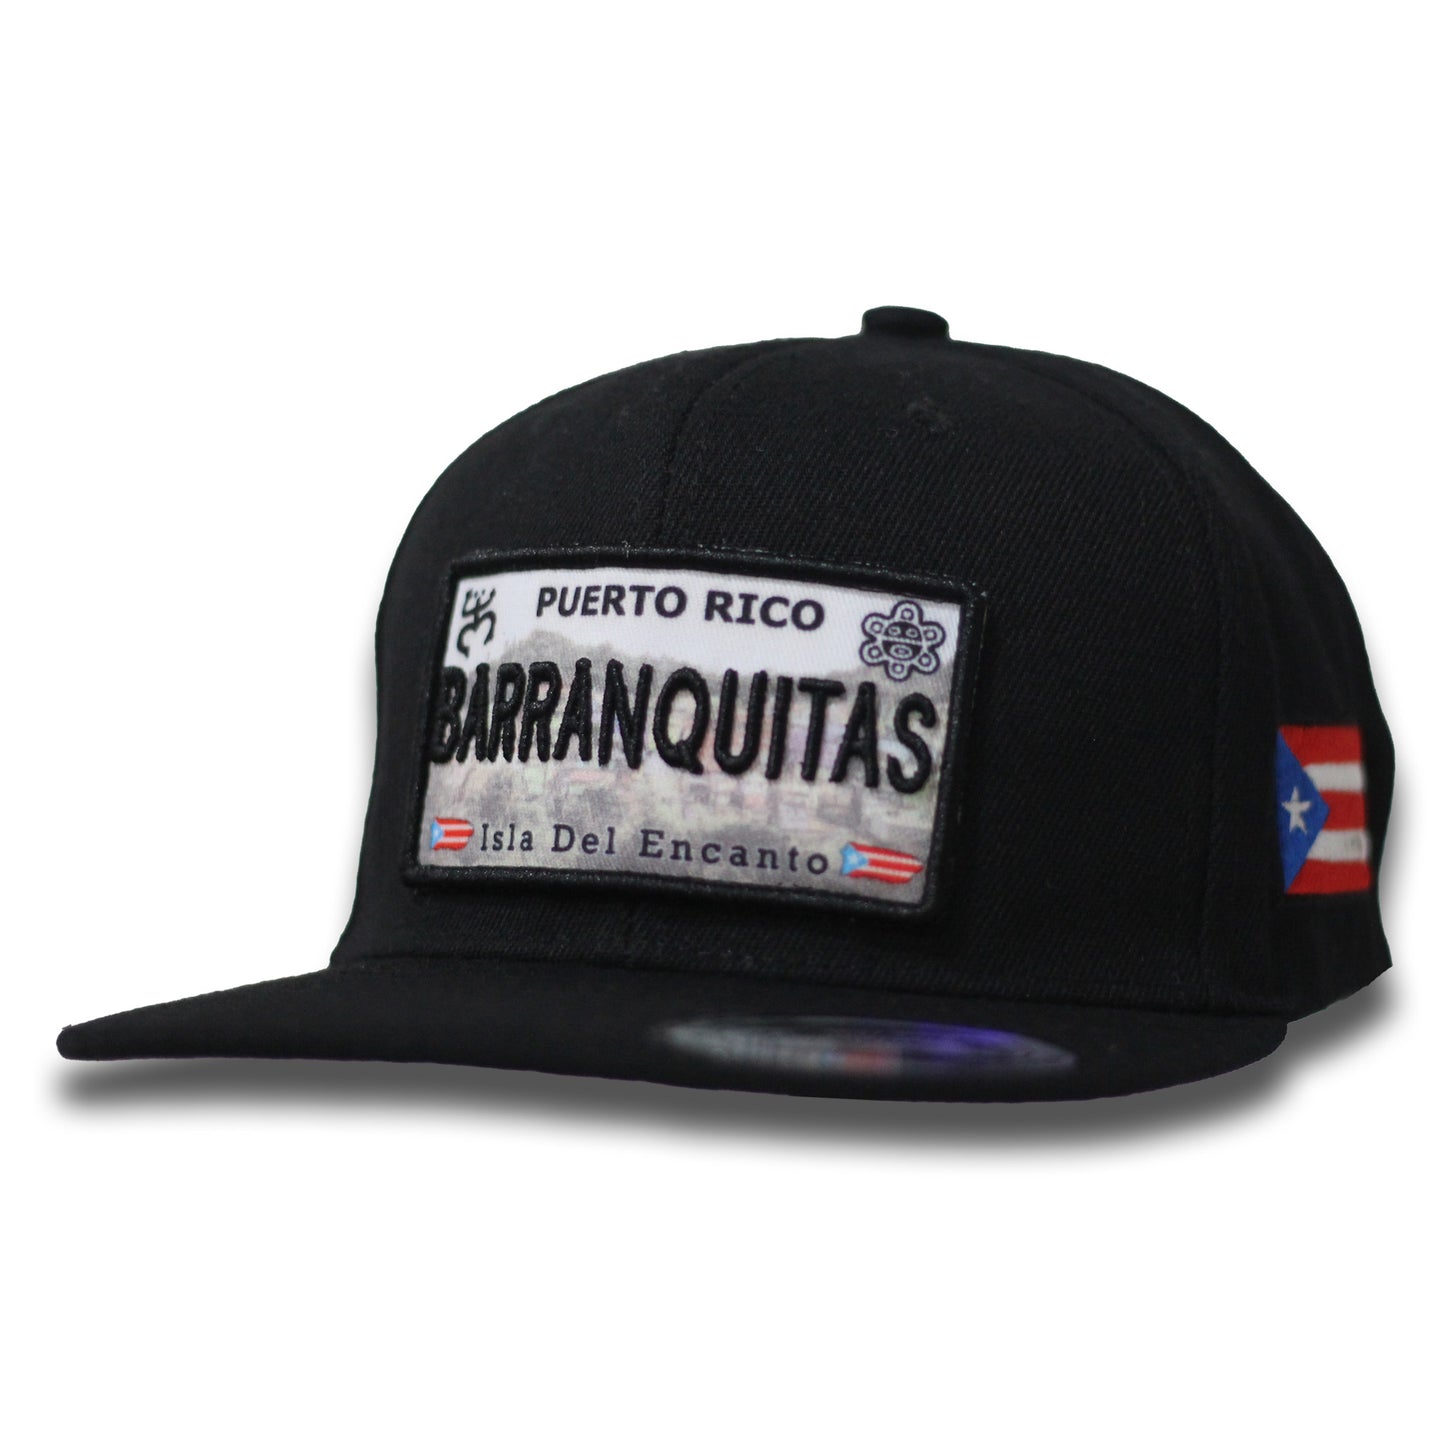 Barranquitas Hat